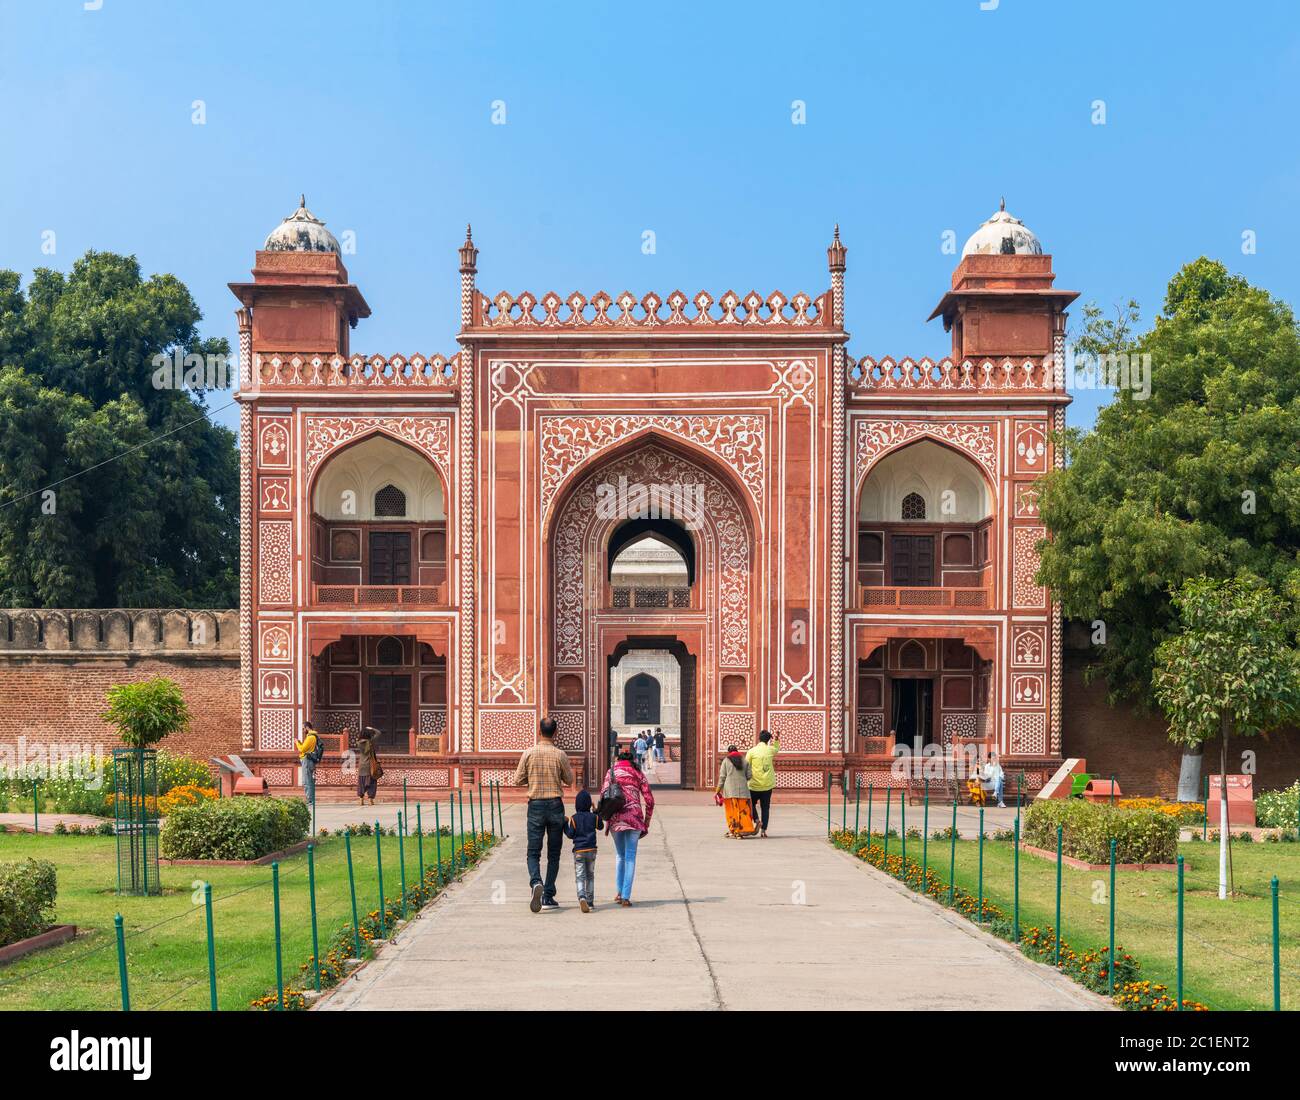 Porta d'ingresso alla Tomba di Itmad-ud-Daulah (i'timād-ud-Daulah), conosciuta anche come 'Baby Taj', un mausoleo Mughal nella città di Agra, Uttar Pradesh, Ind Foto Stock